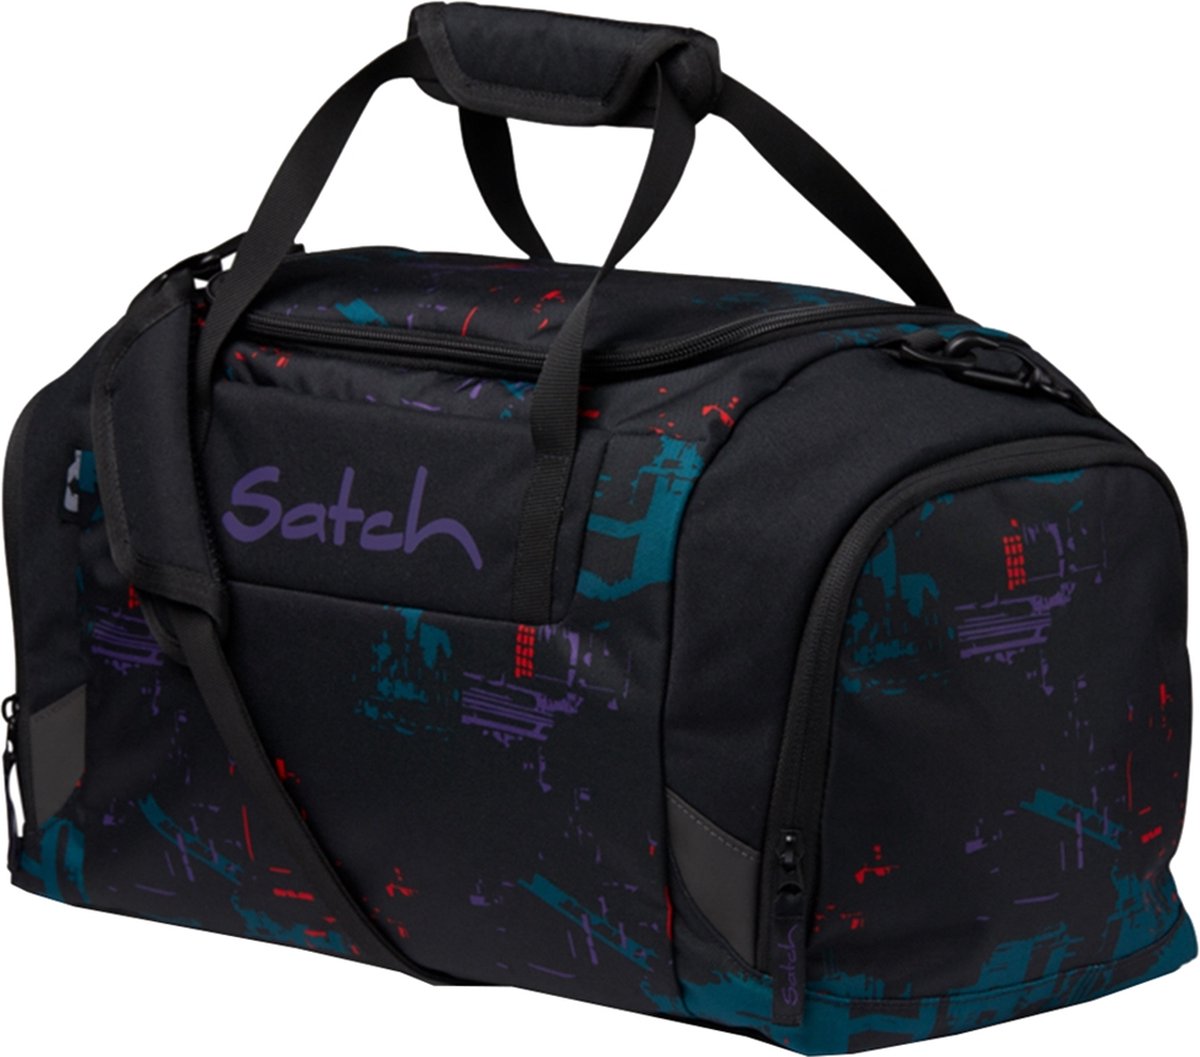 Satch Duffle Bag night vision